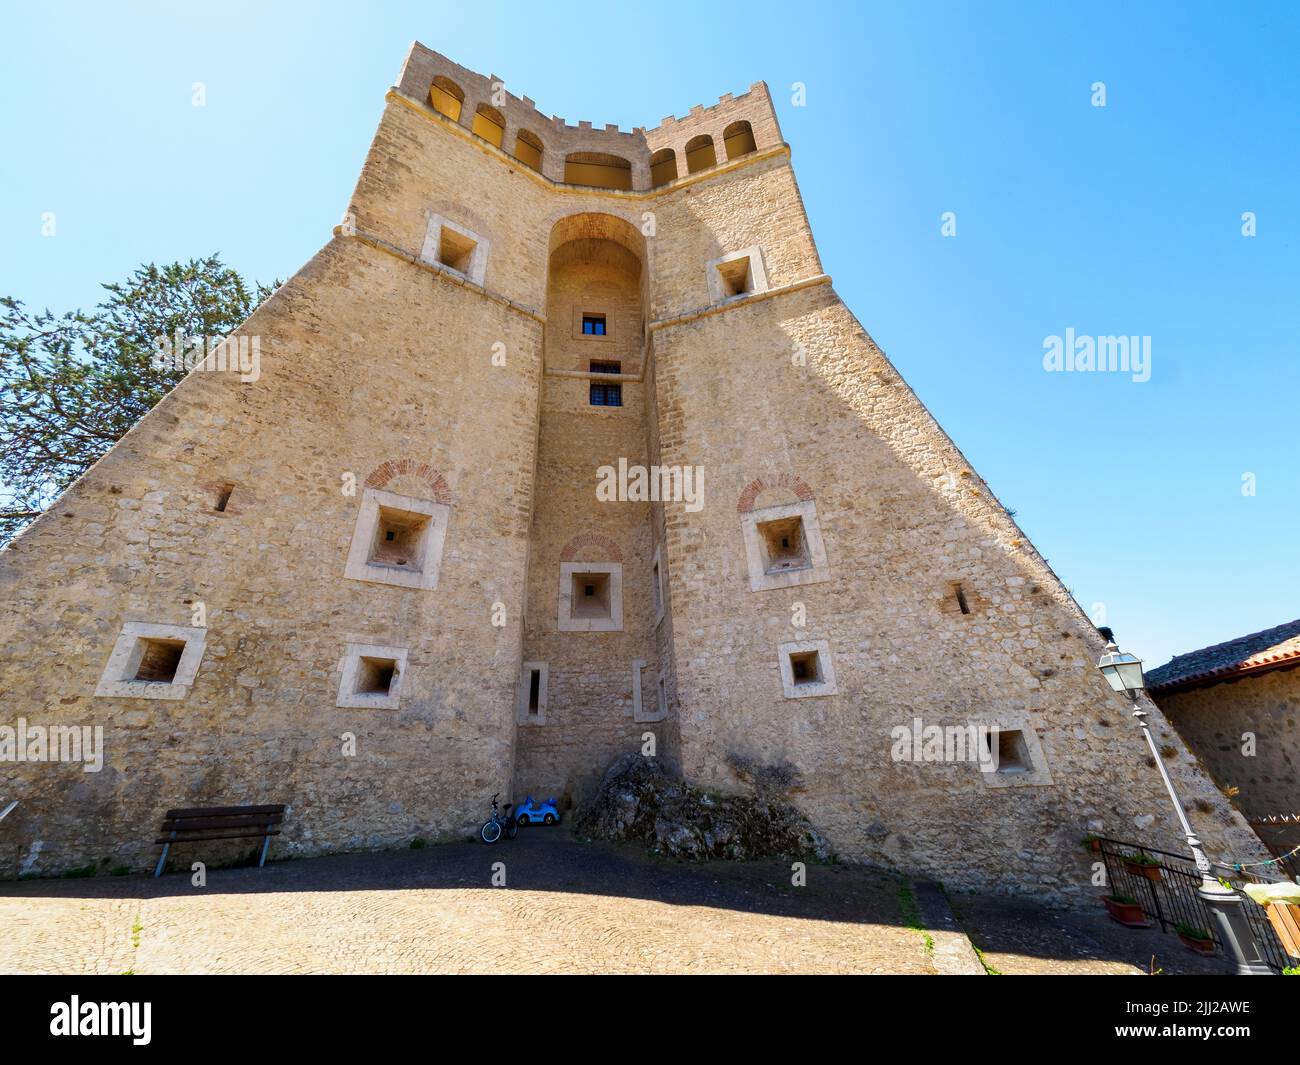 Murs du château Sforza Cesarini à Rocca Sinibalda - Rieti, Italie Banque D'Images